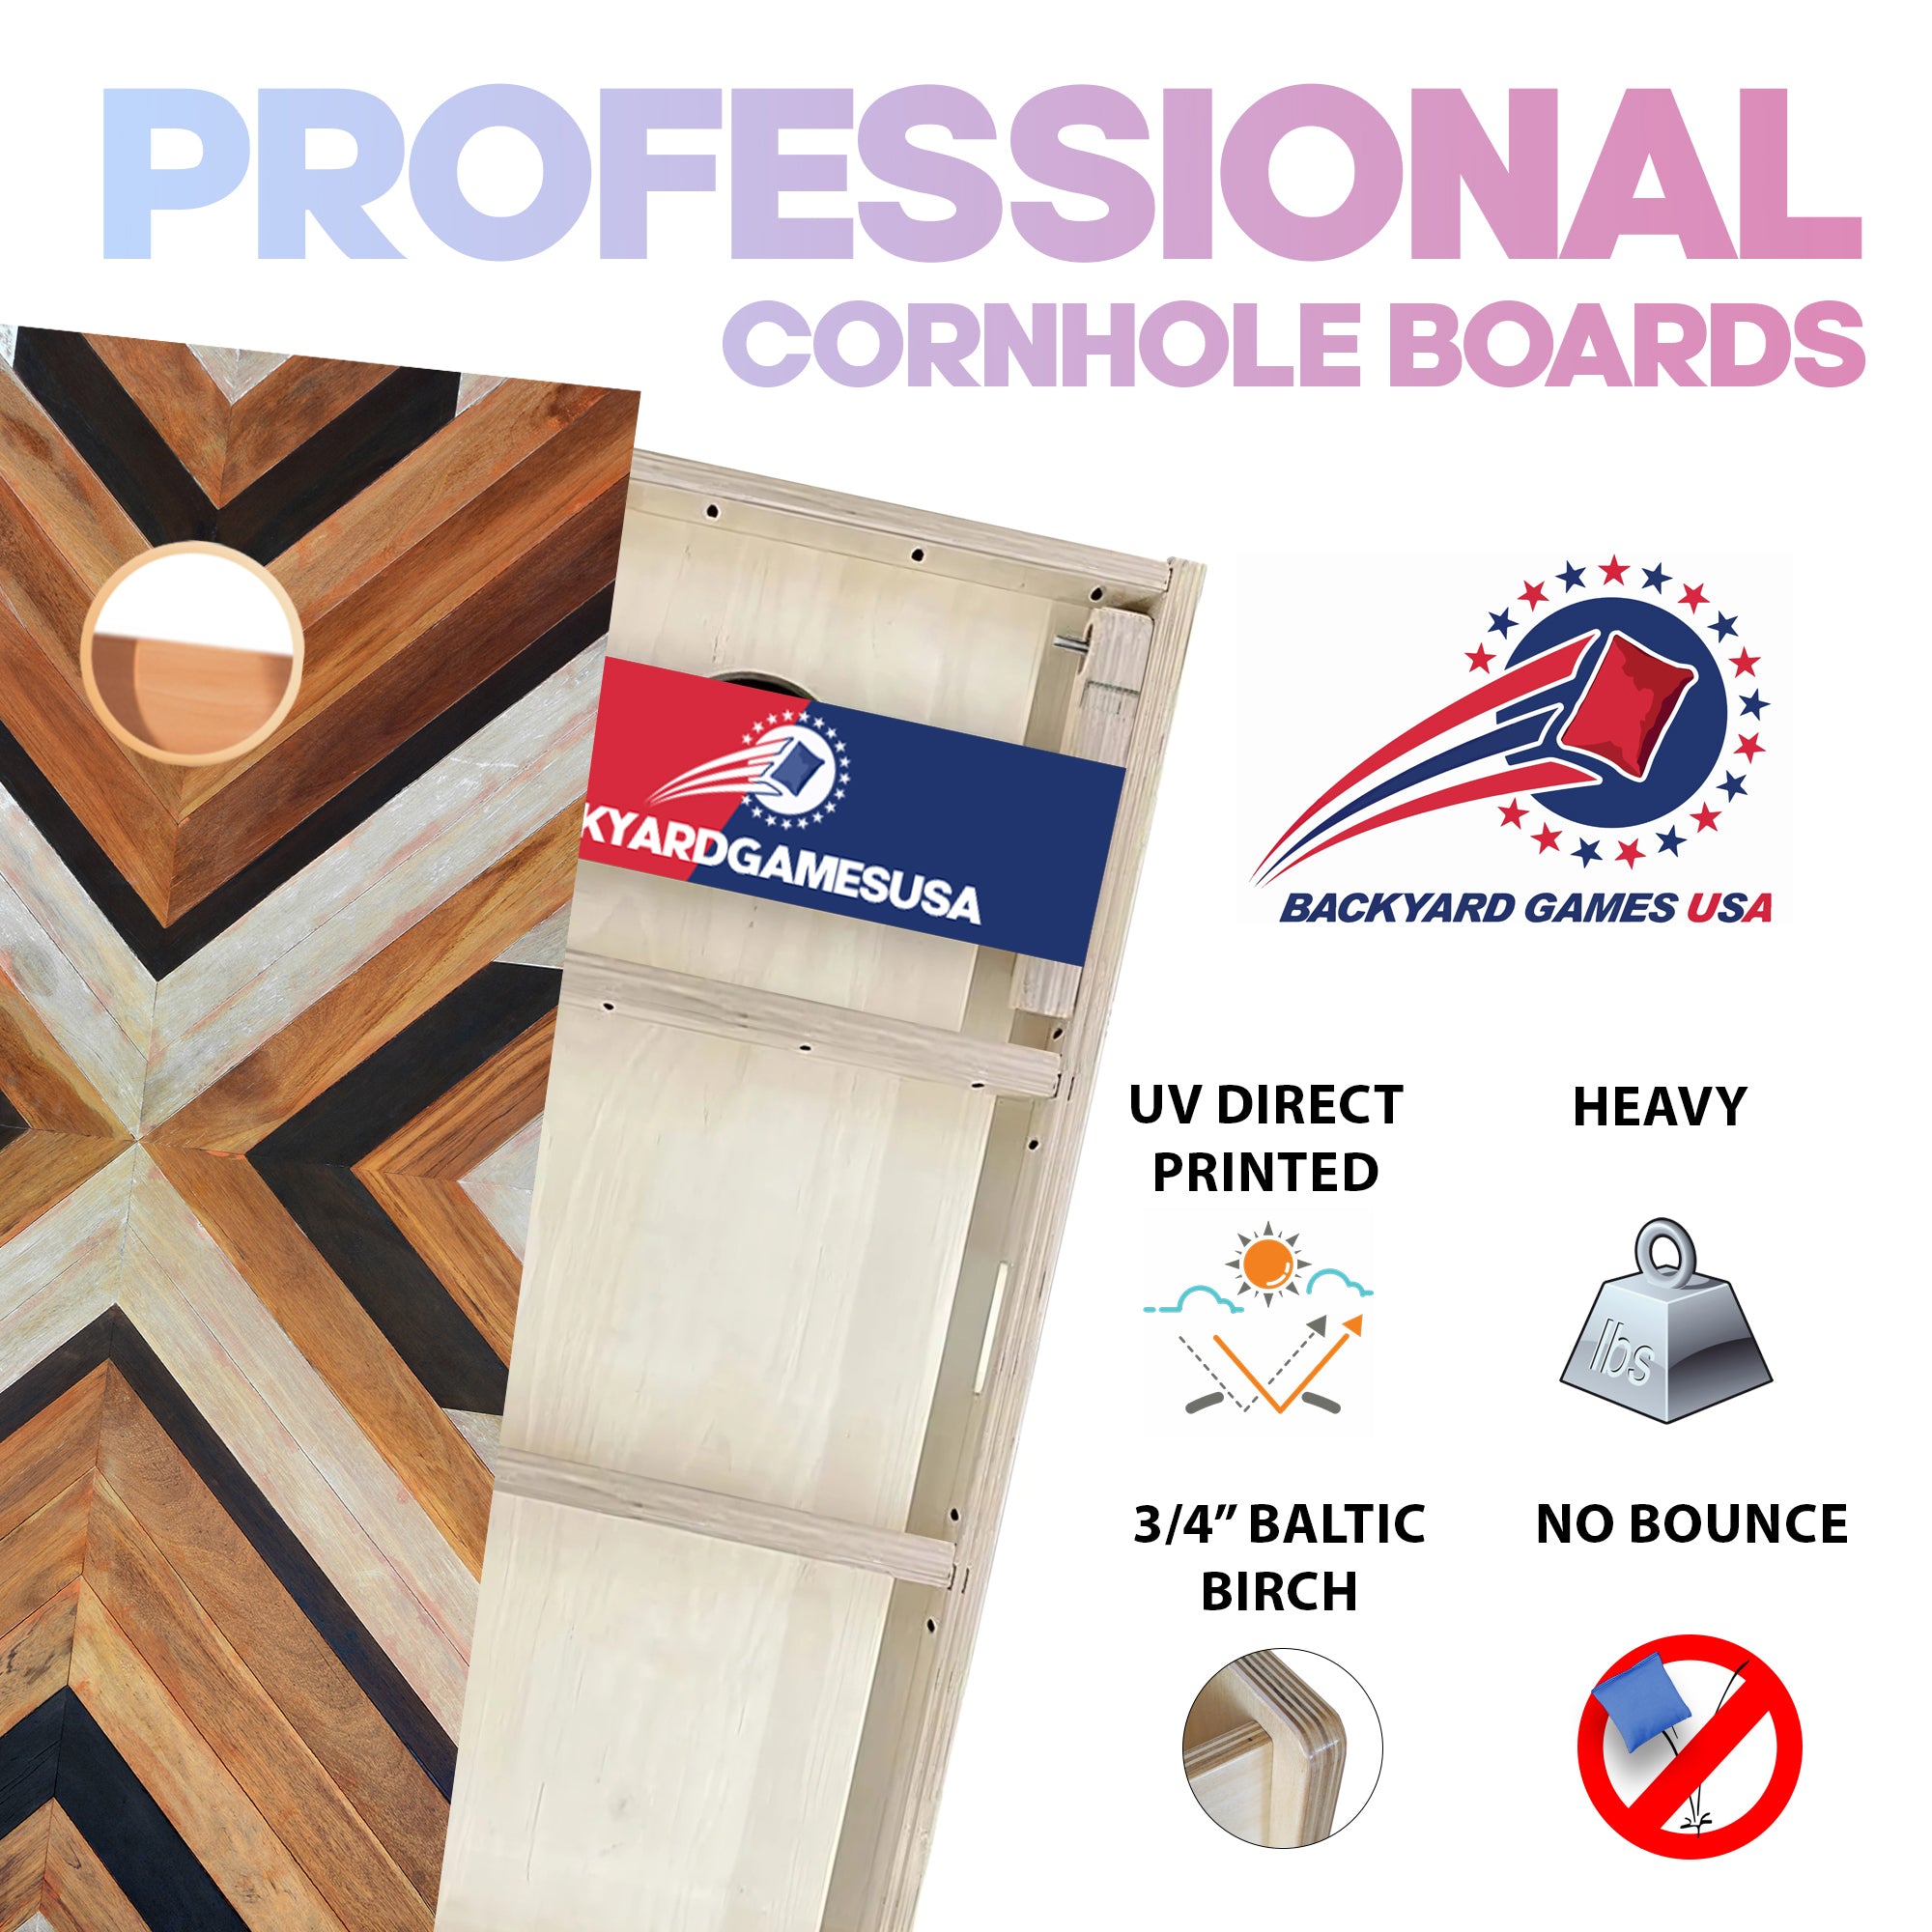 4 Piece Wood Professional Cornhole Boards